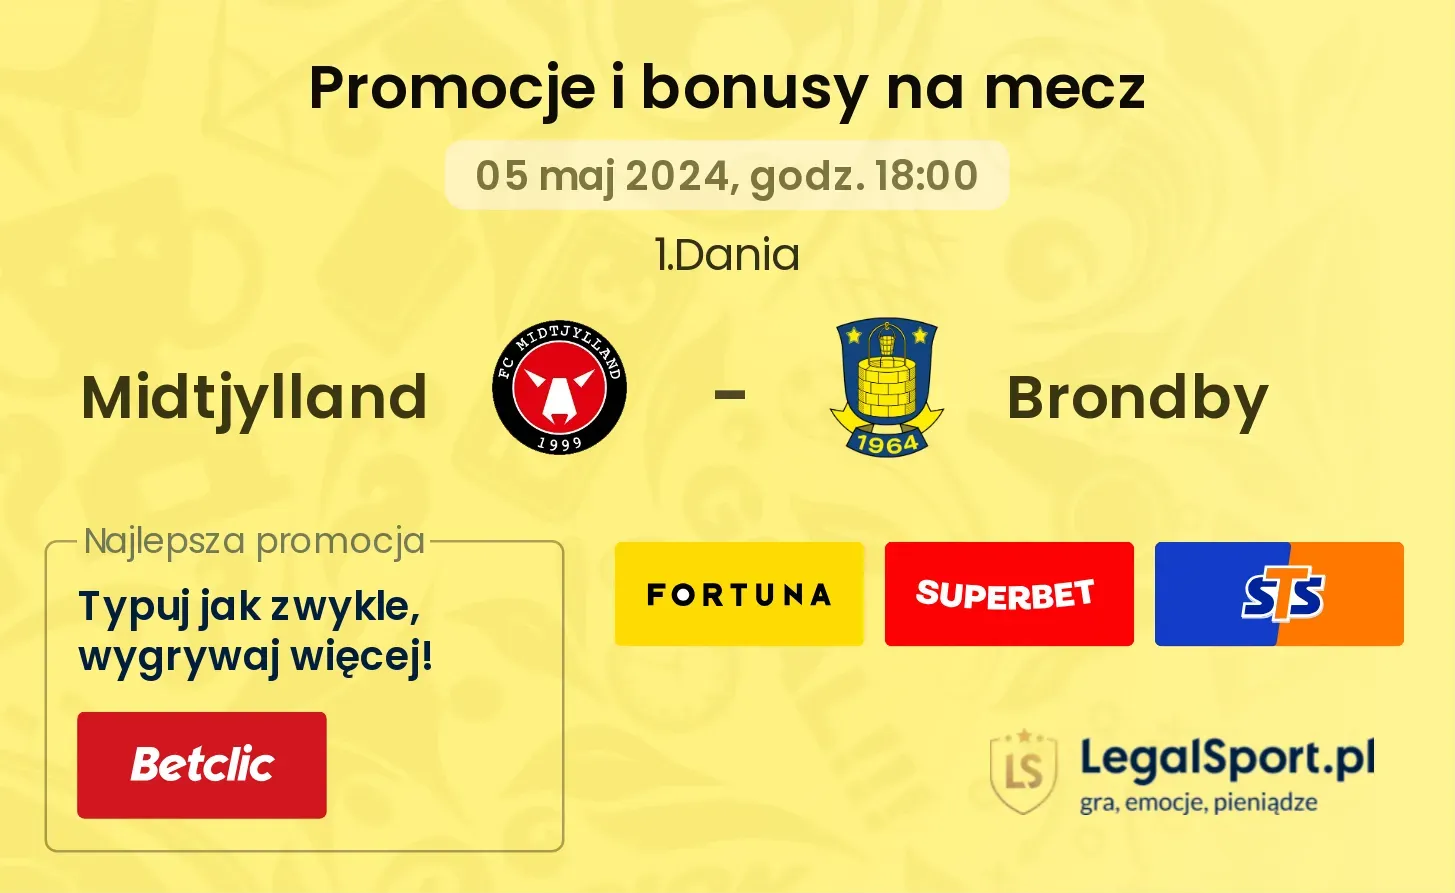 Midtjylland - Brondby promocje bonusy na mecz